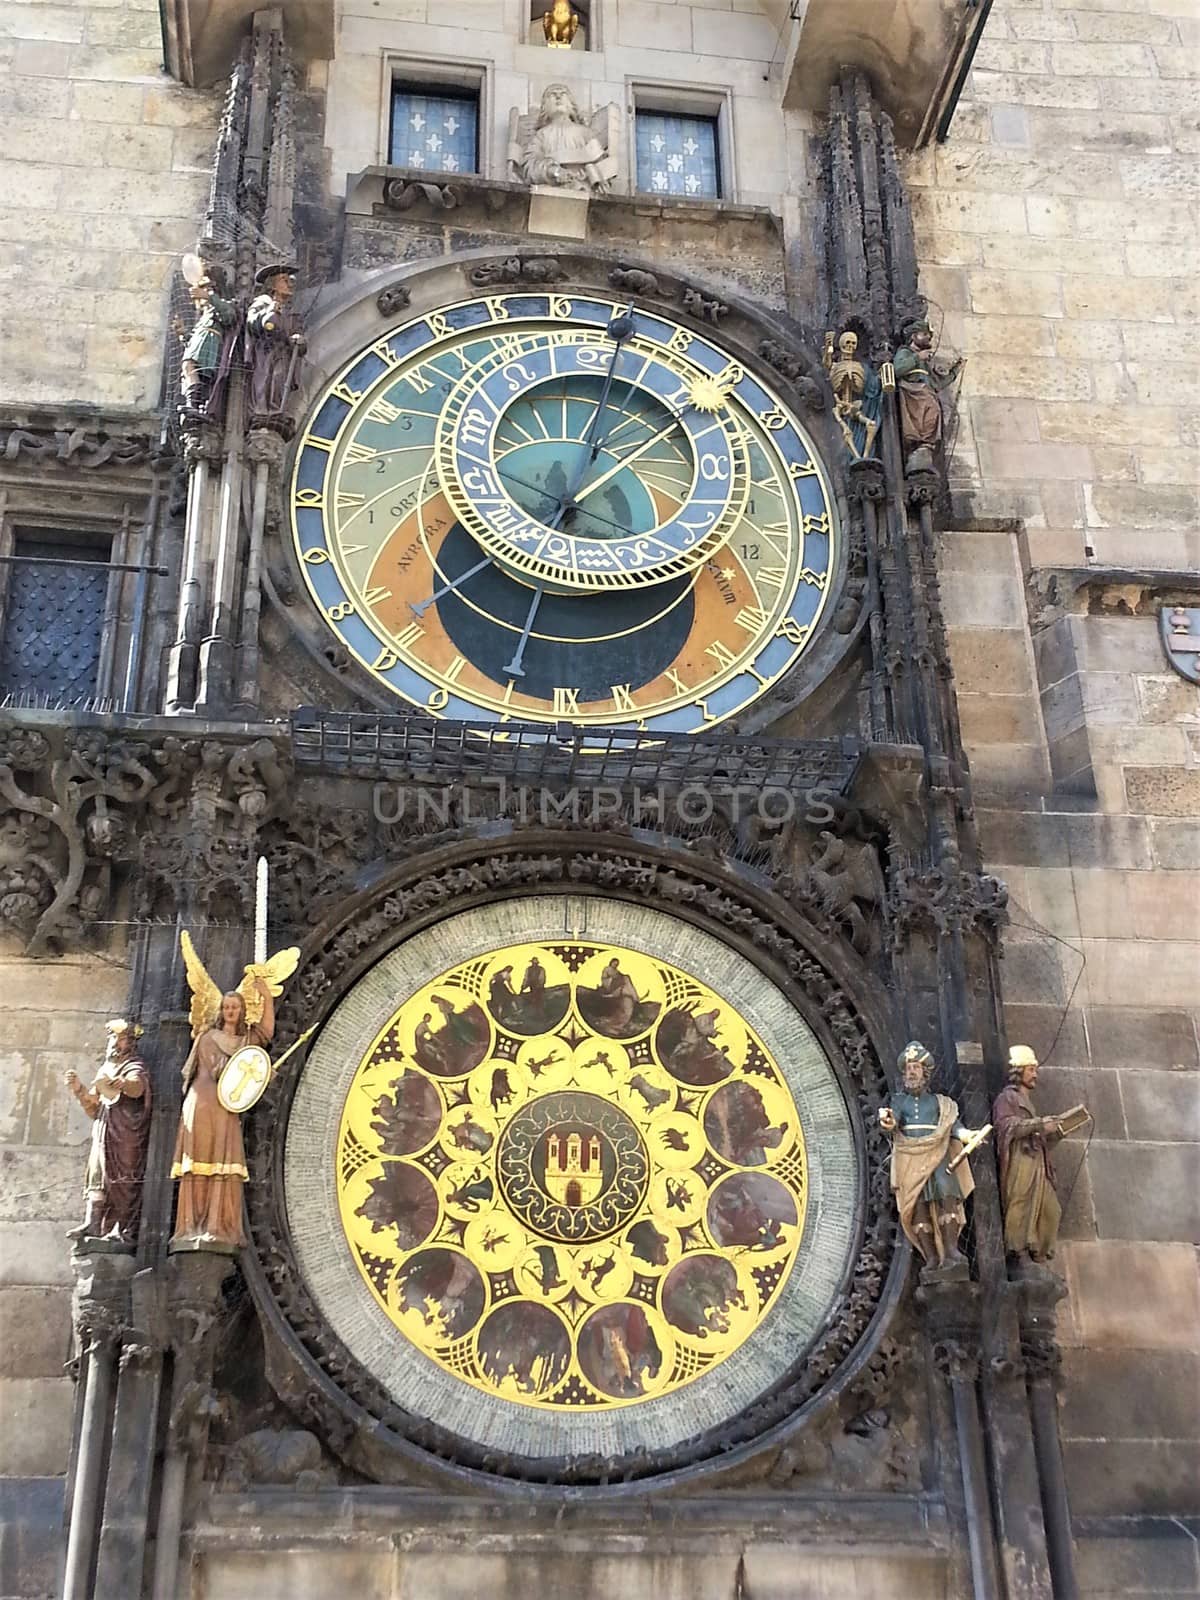 Medieval astronomical clock in the city center of Prague, Czech Republic